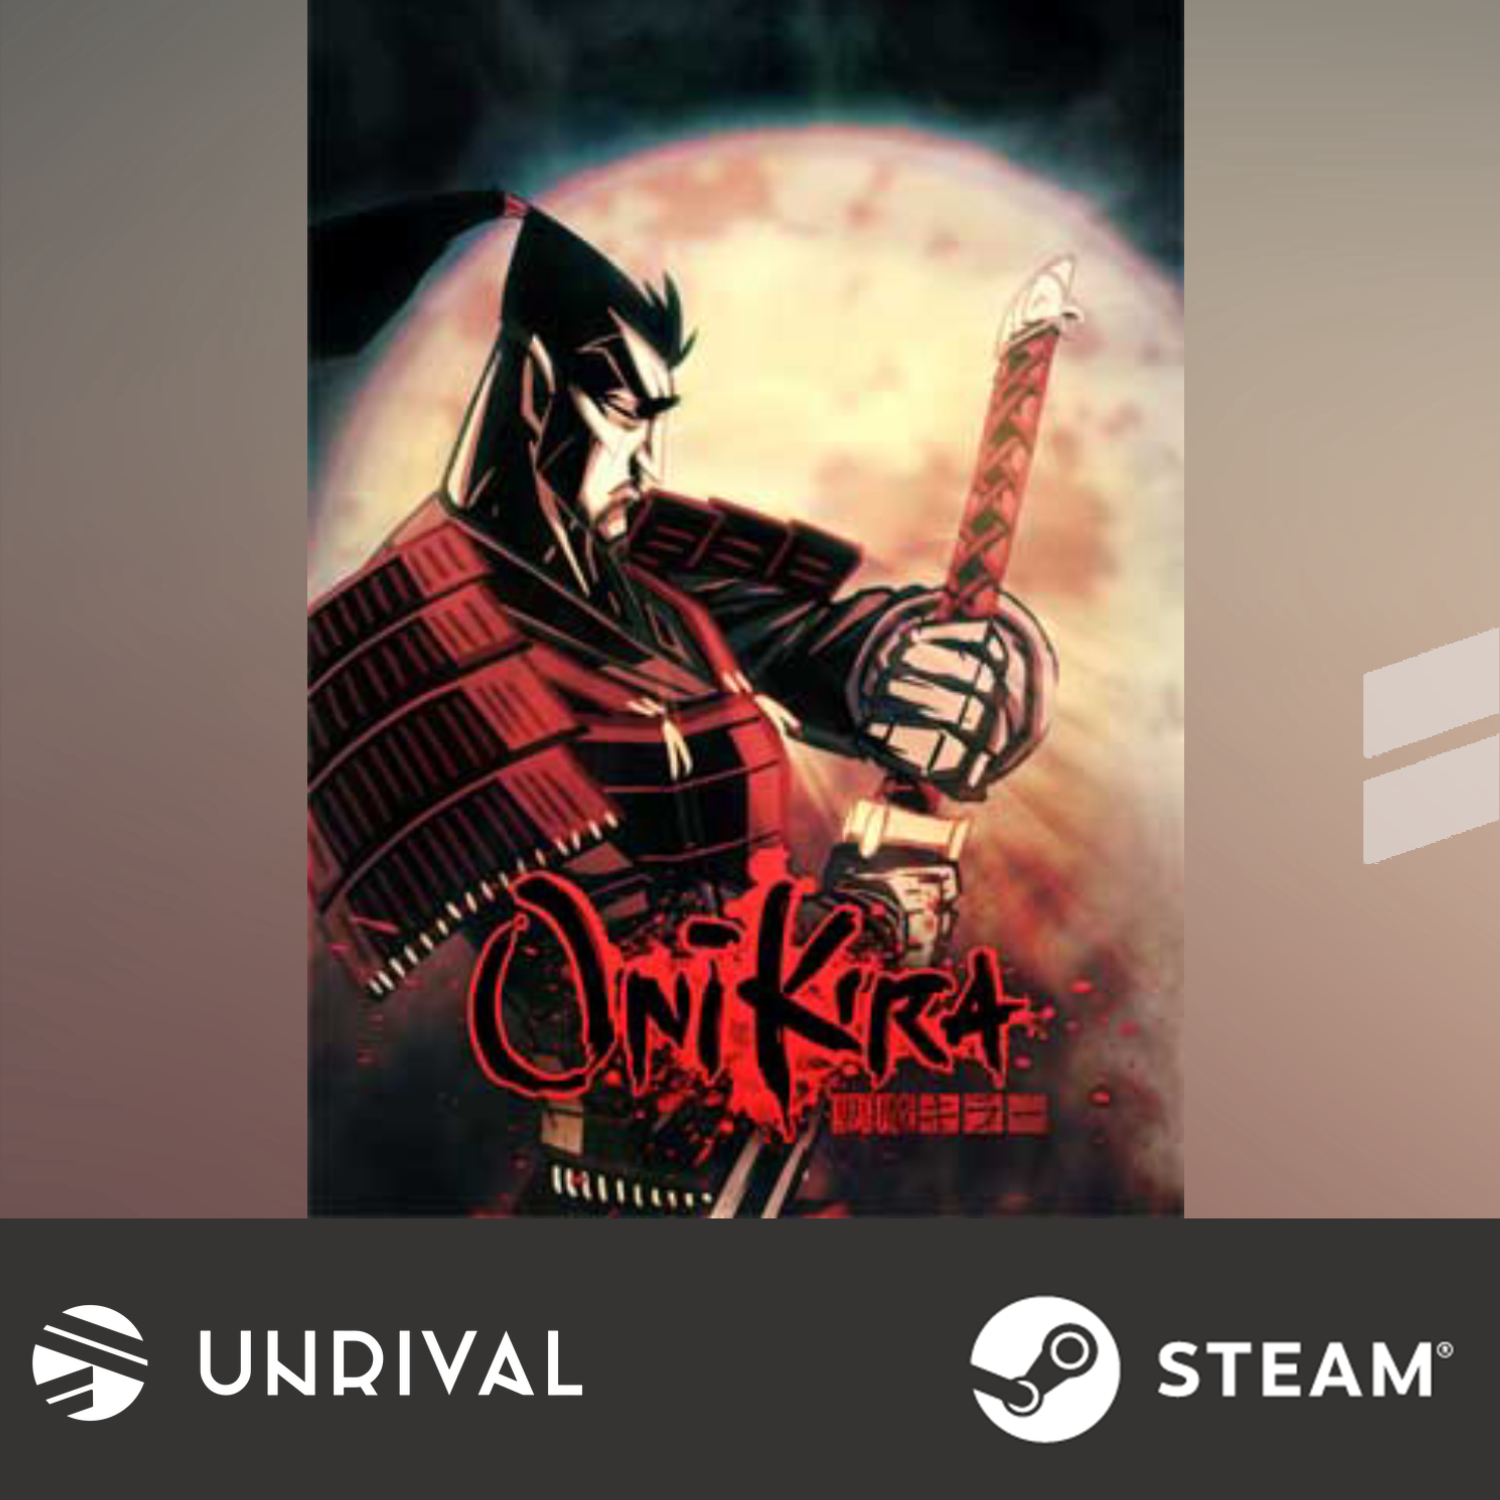 [Hot Sale] Onikira - Demon Killer PC Digital Download Game - Unrival